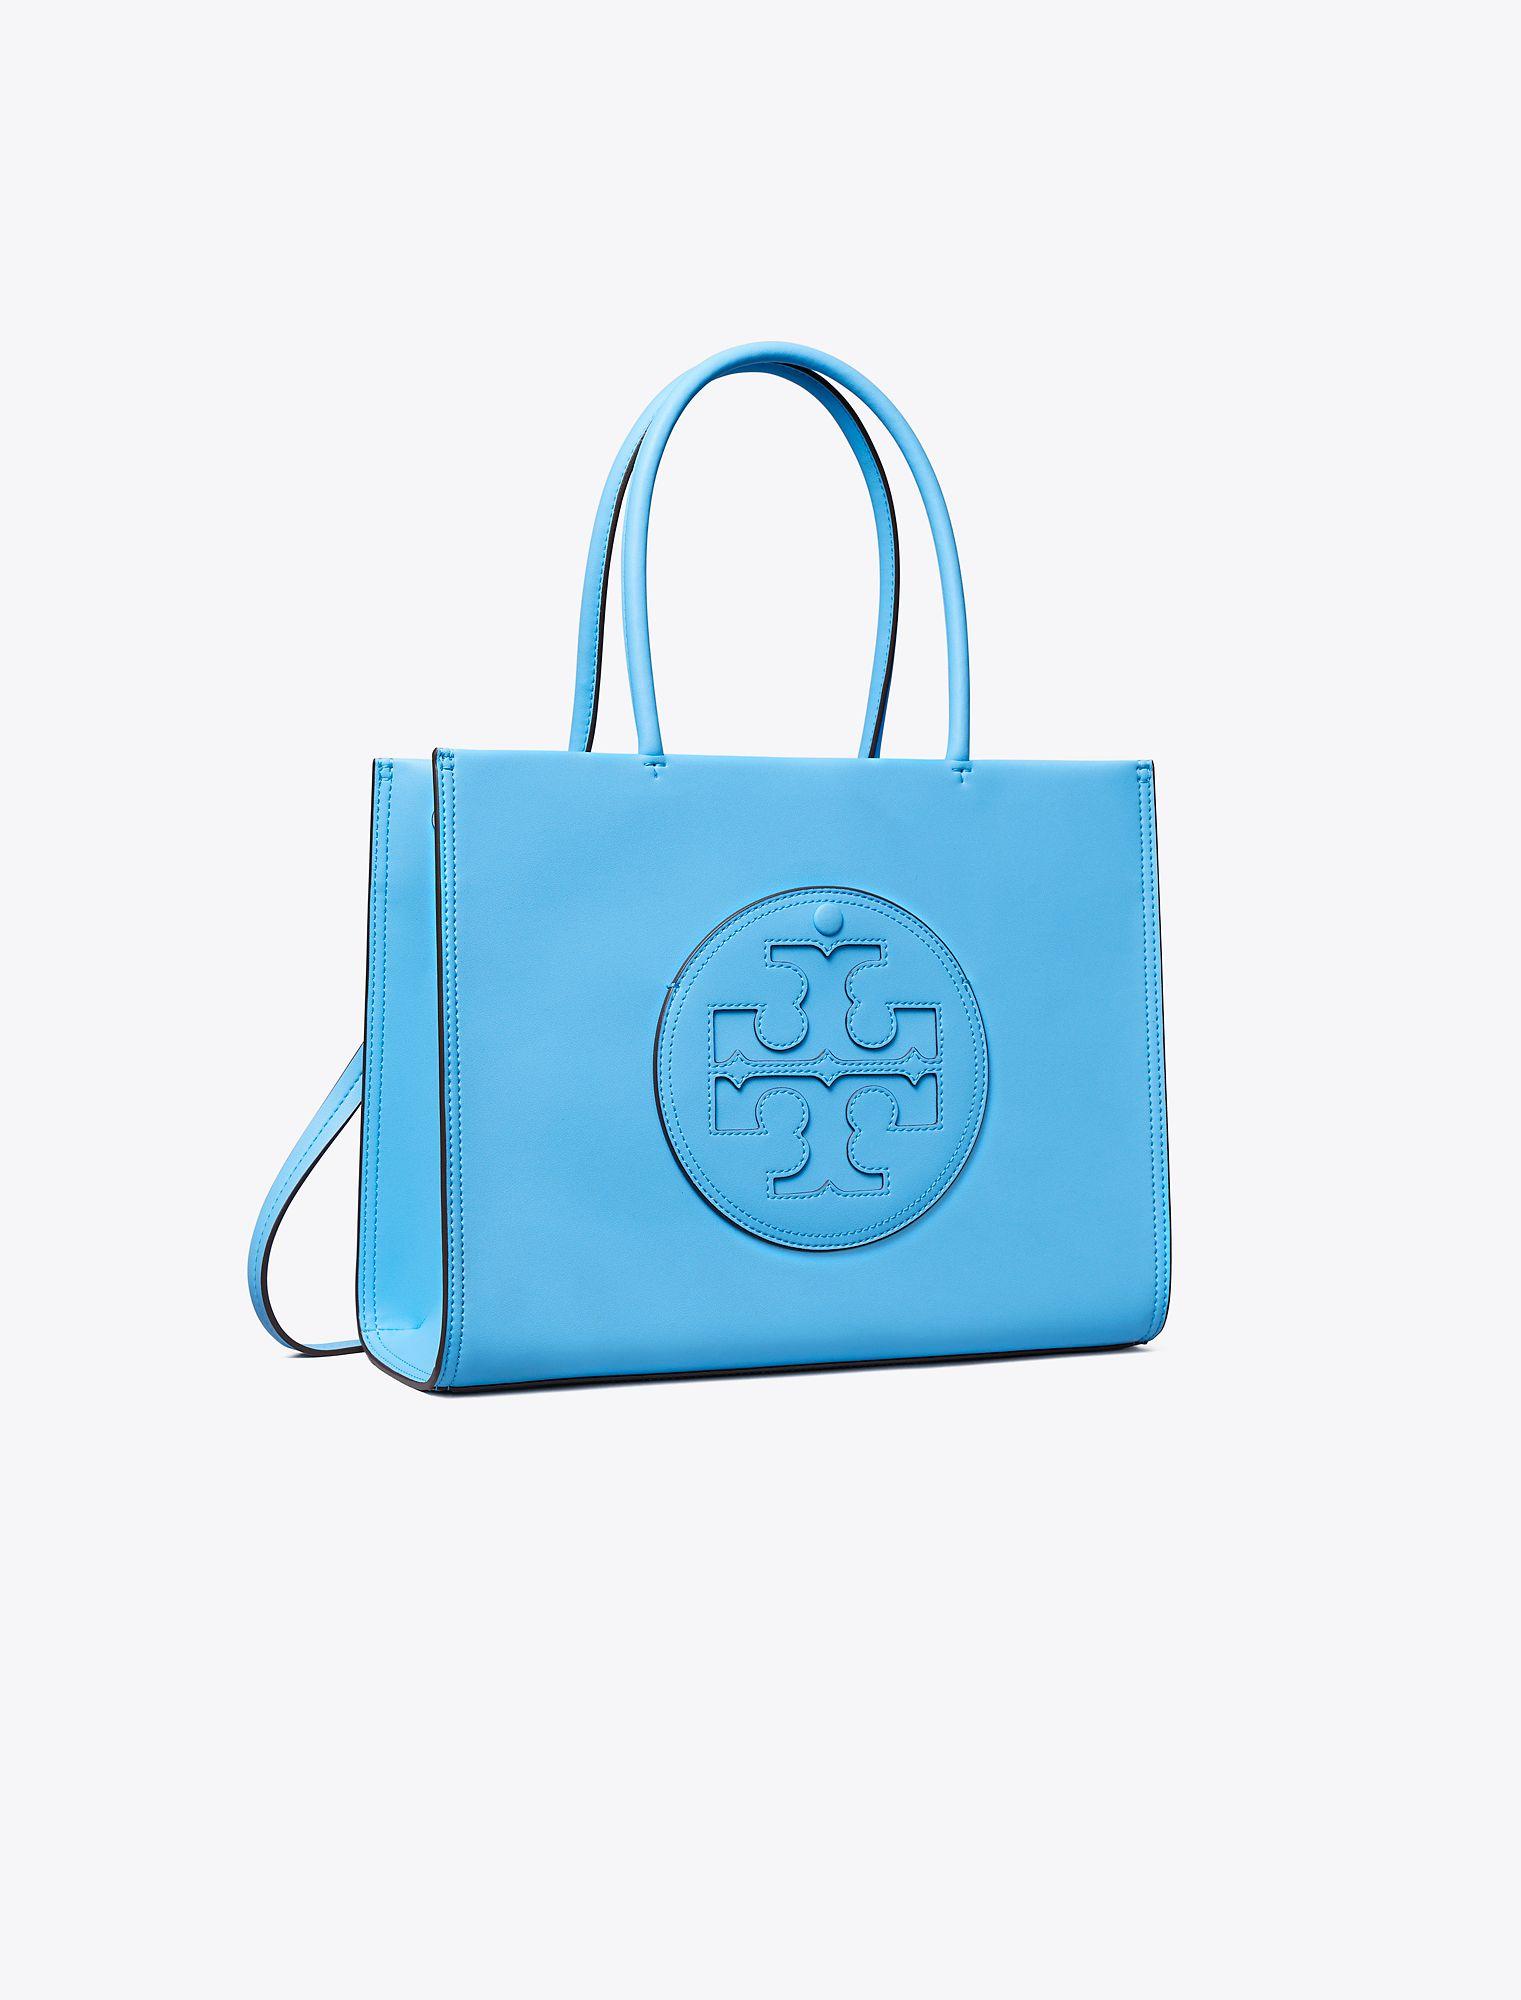 Tory Burch 'ella Bio Small' Shopper Bag in Blue